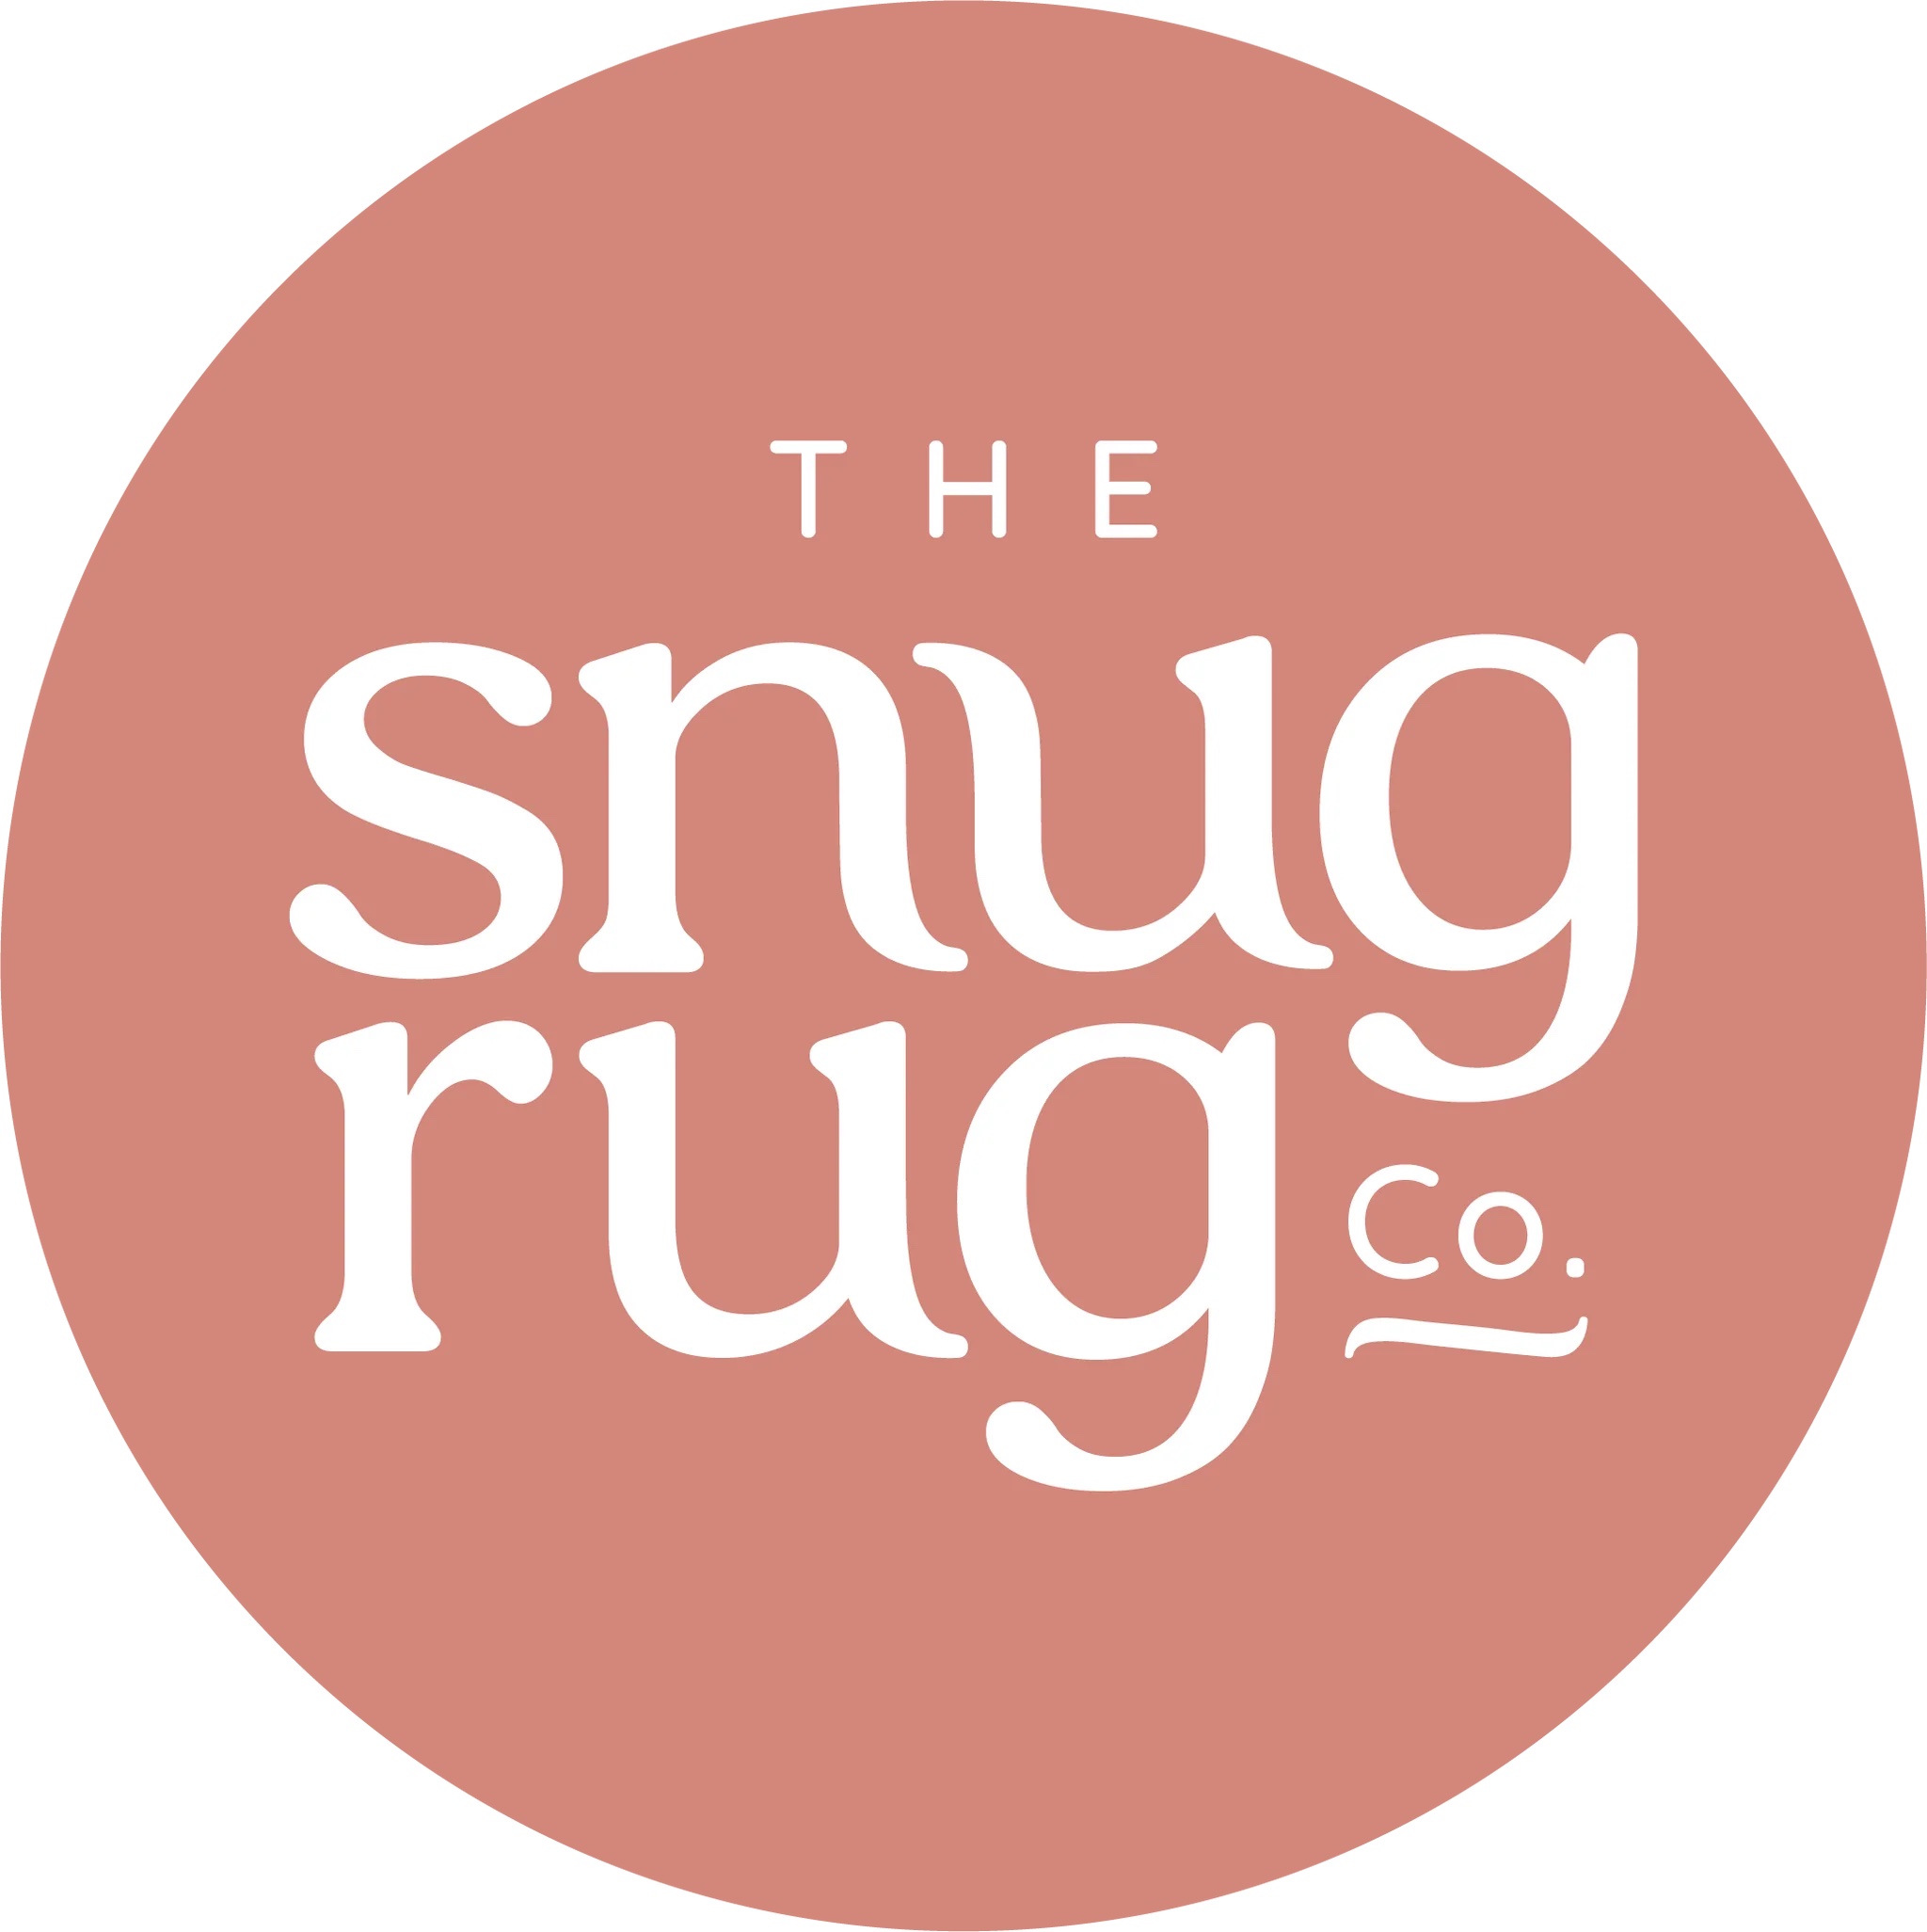 EXHIBITOR: The Snug Rug Company